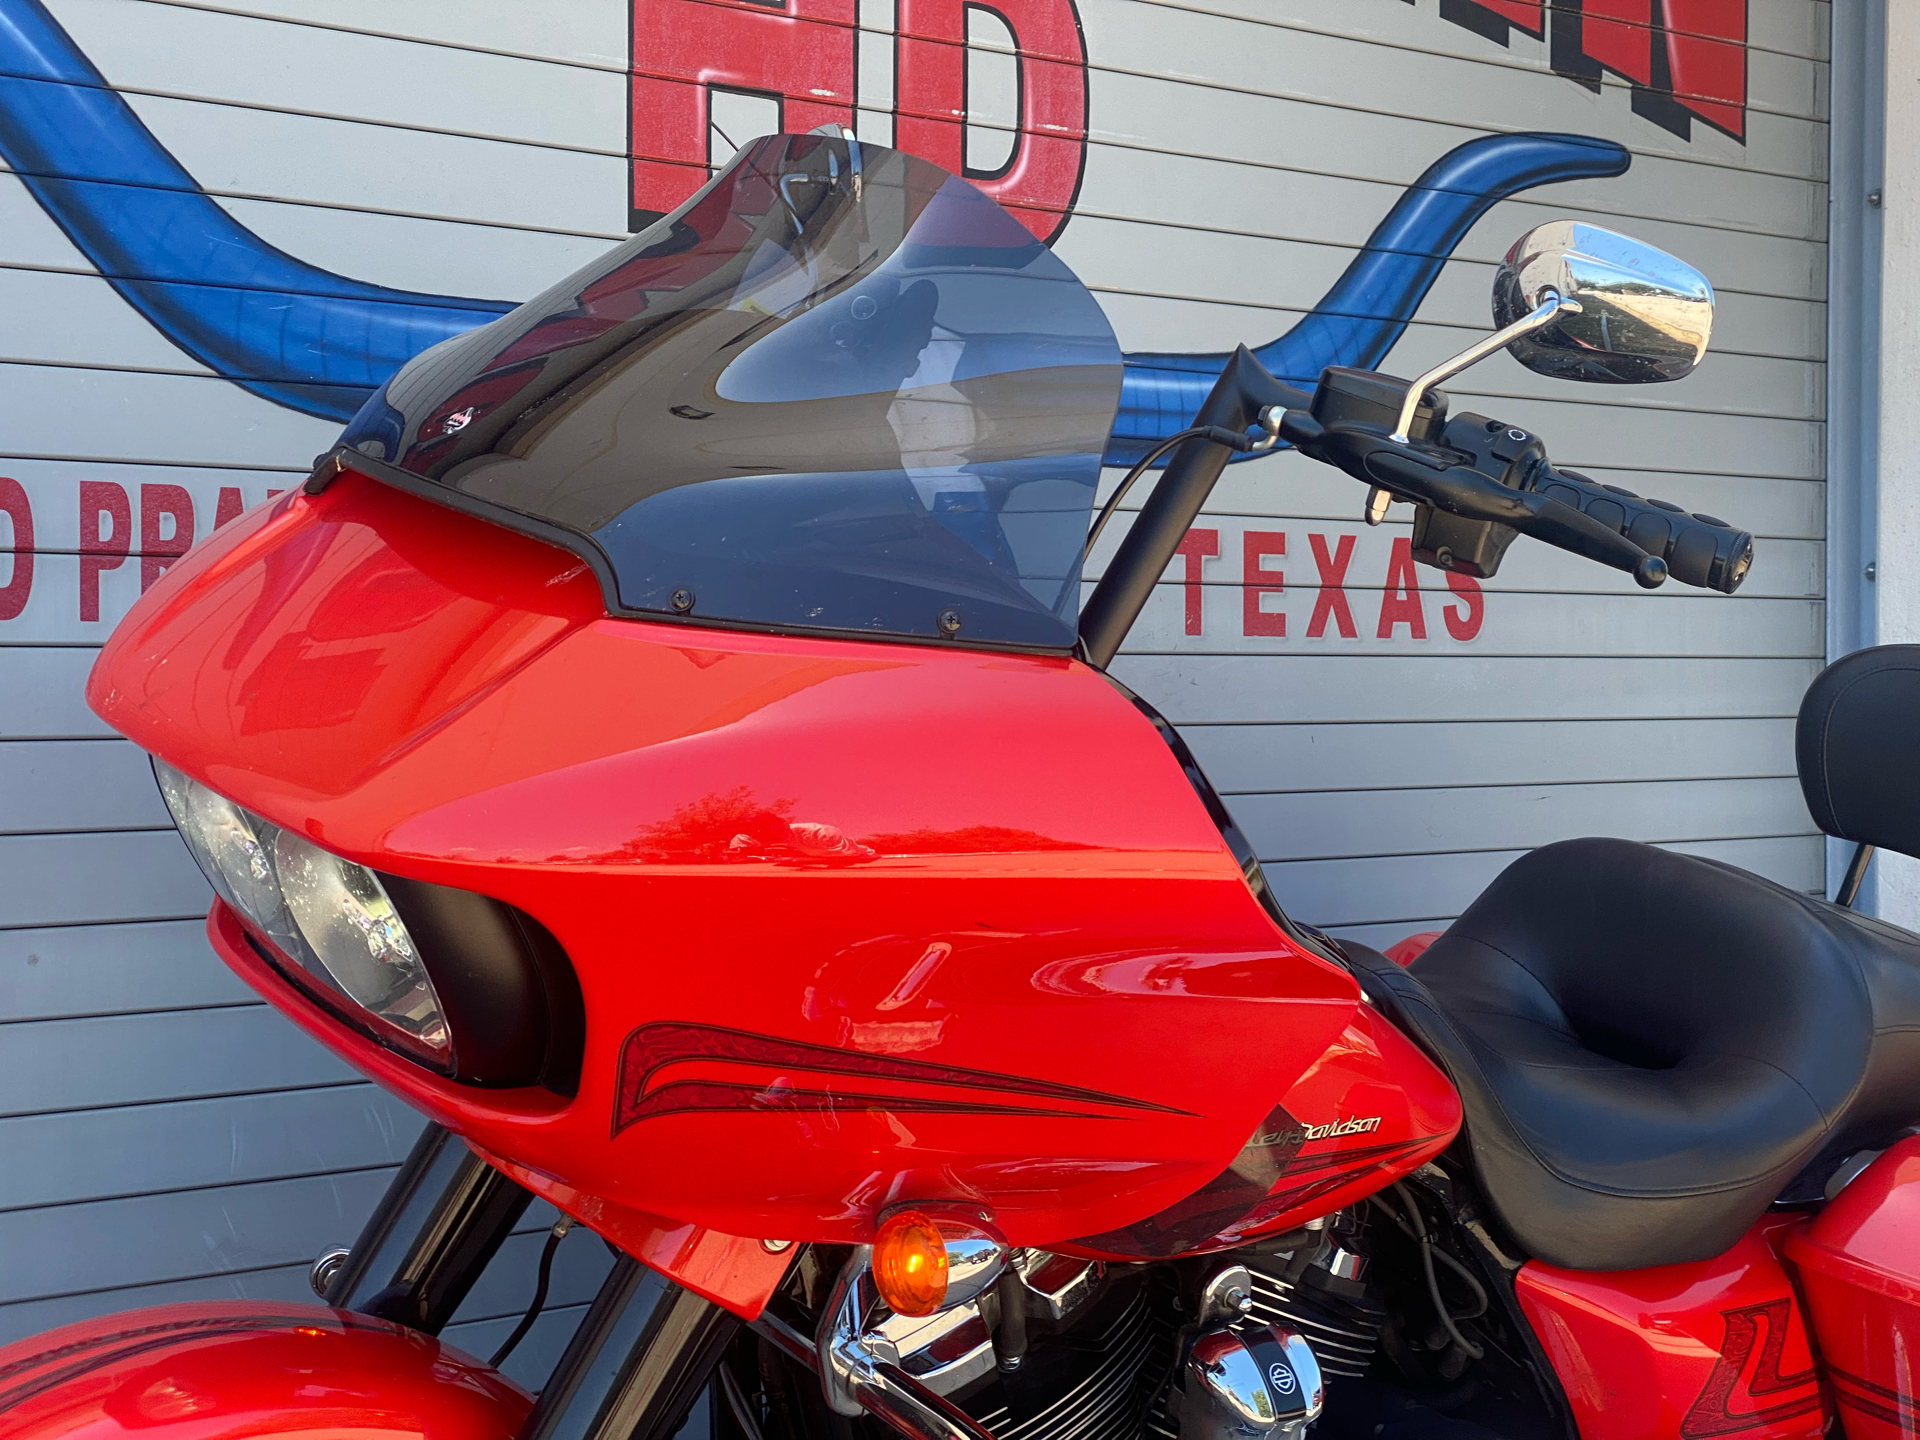 2017 Harley-Davidson Road Glide® Special in Grand Prairie, Texas - Photo 13